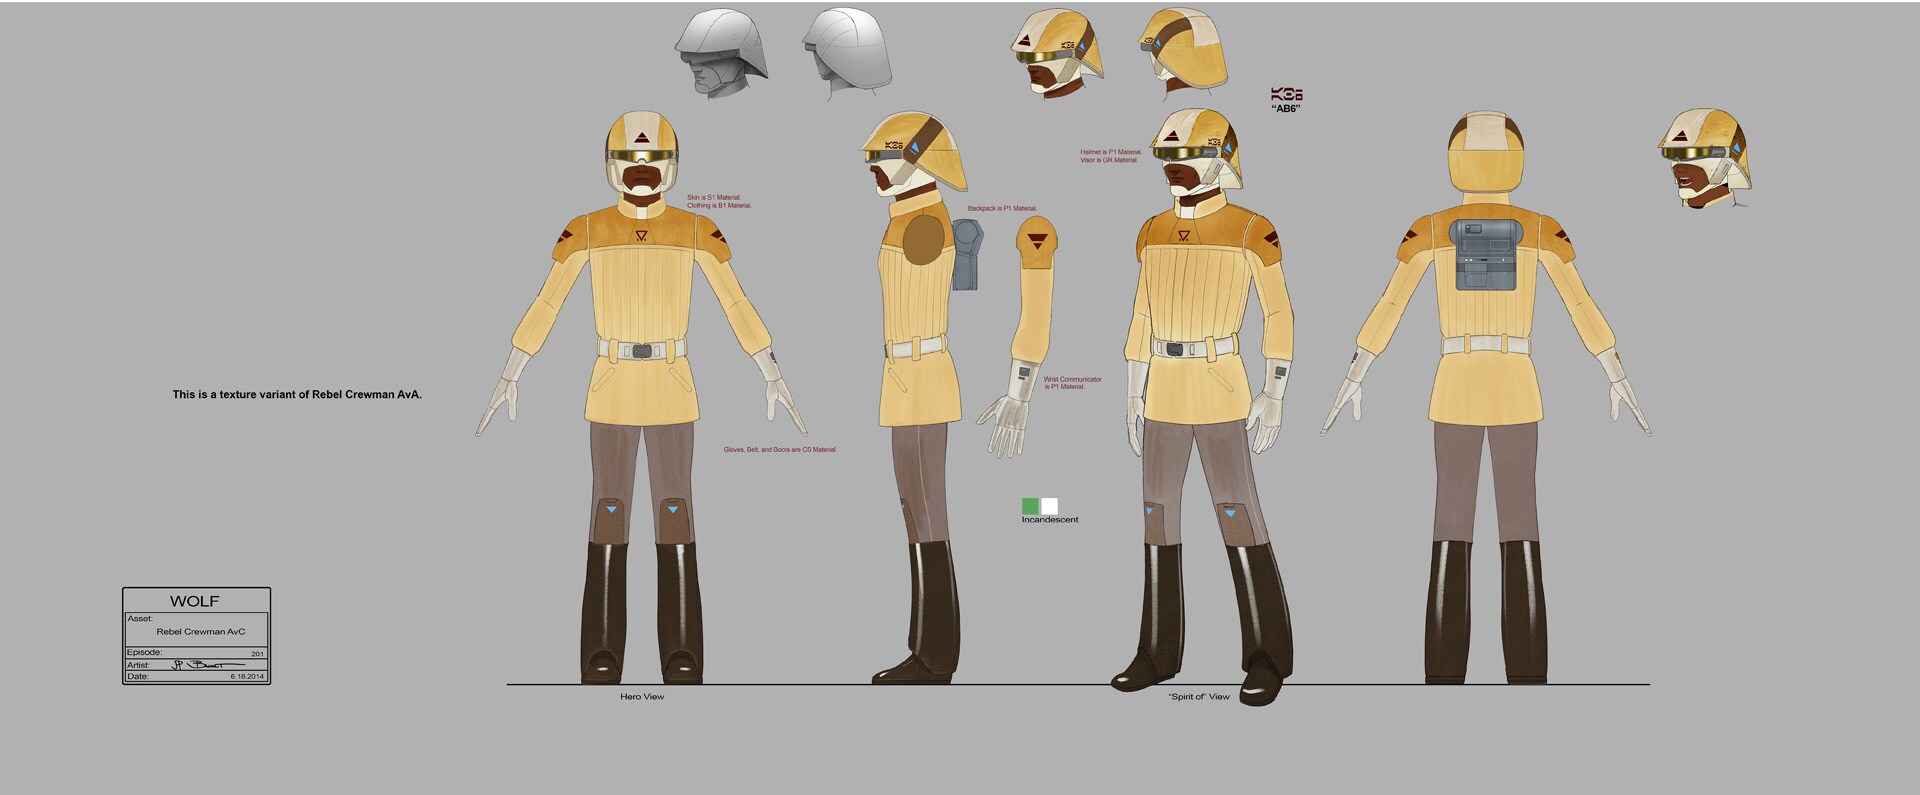 Rebel crewman full character illustration by JP Balmet.